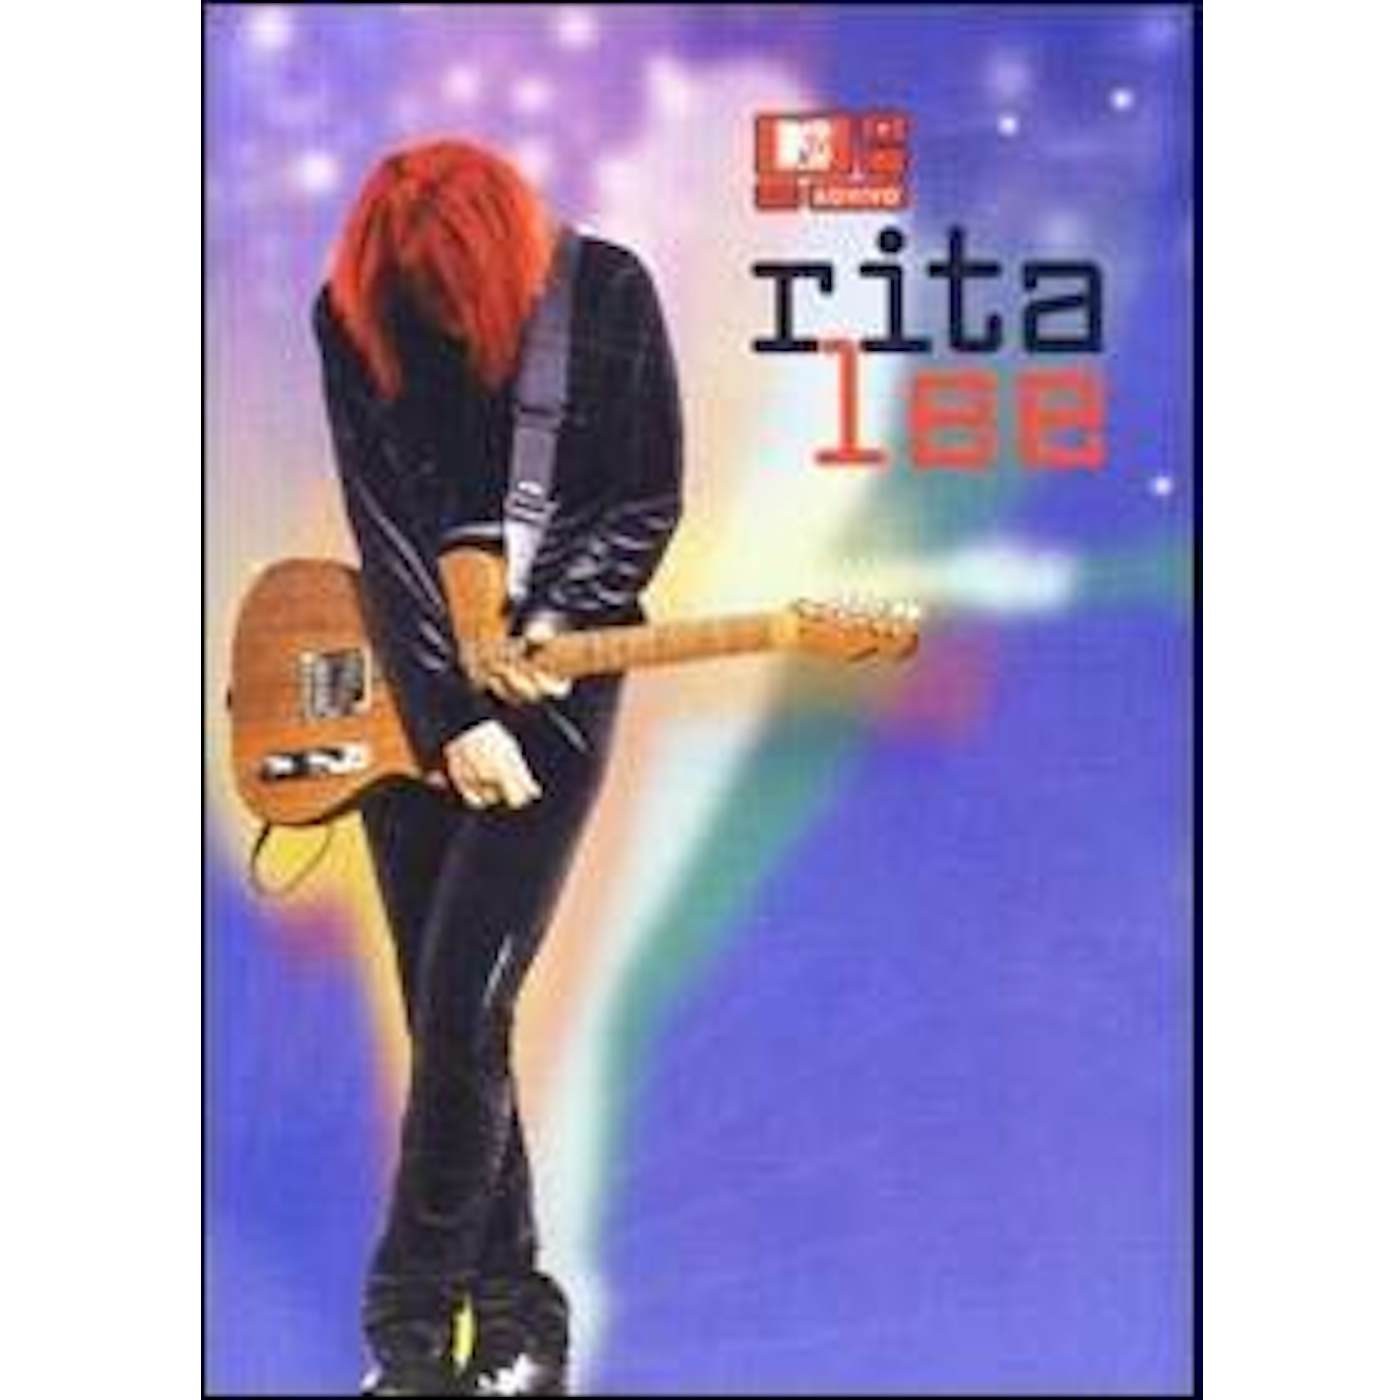 Rita Lee MTV AO VIVO CD